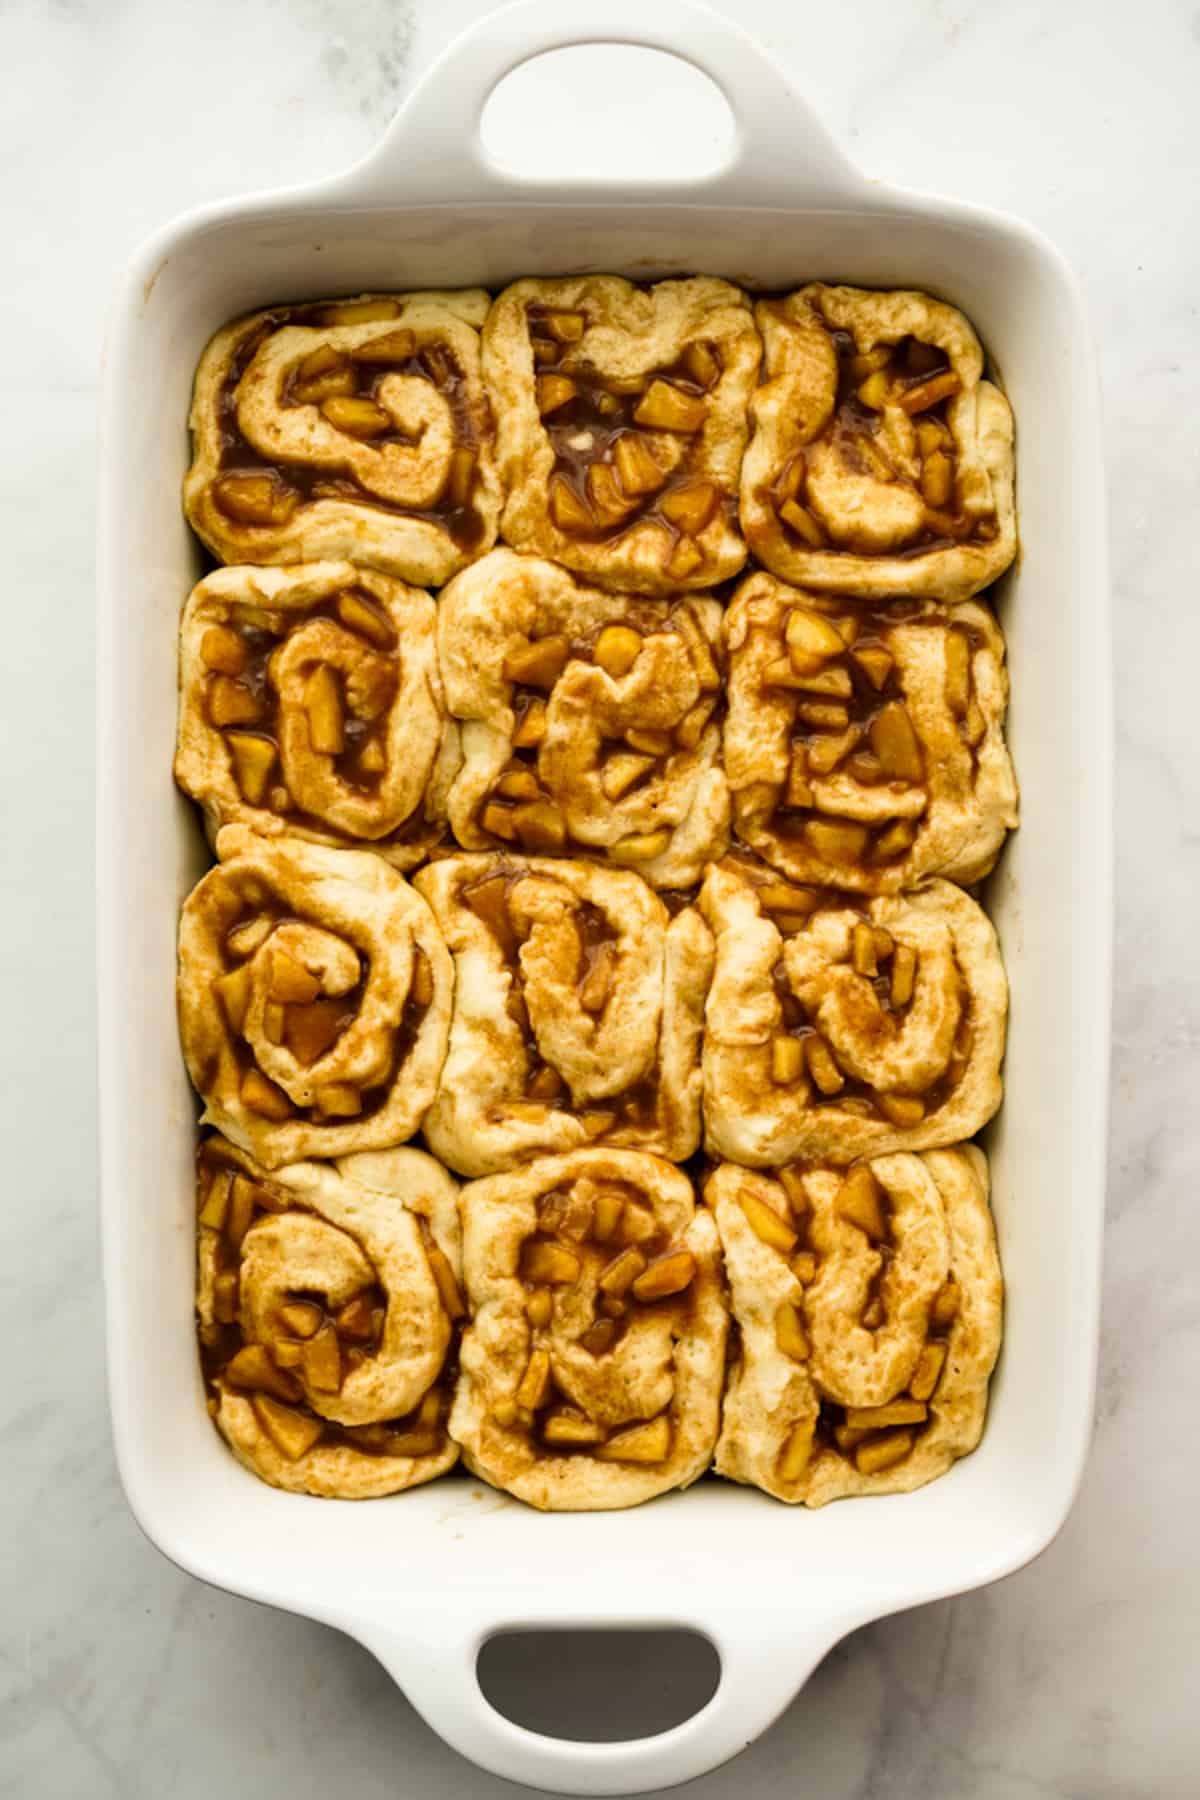 Pre-bake apple cinnamon rolls